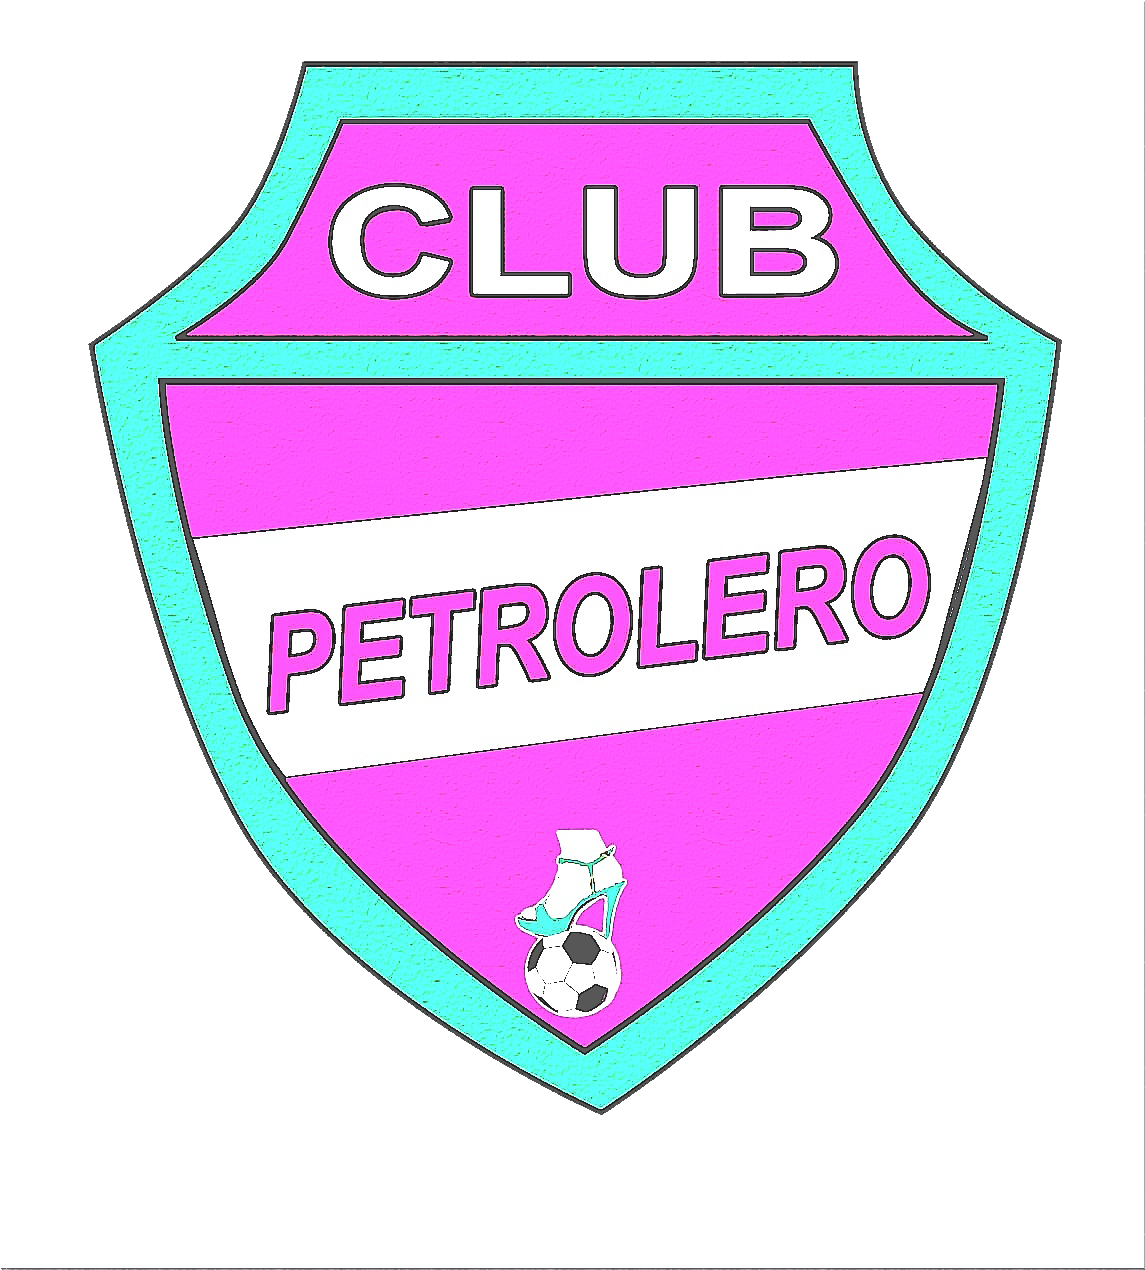 CLUB PETROLERO